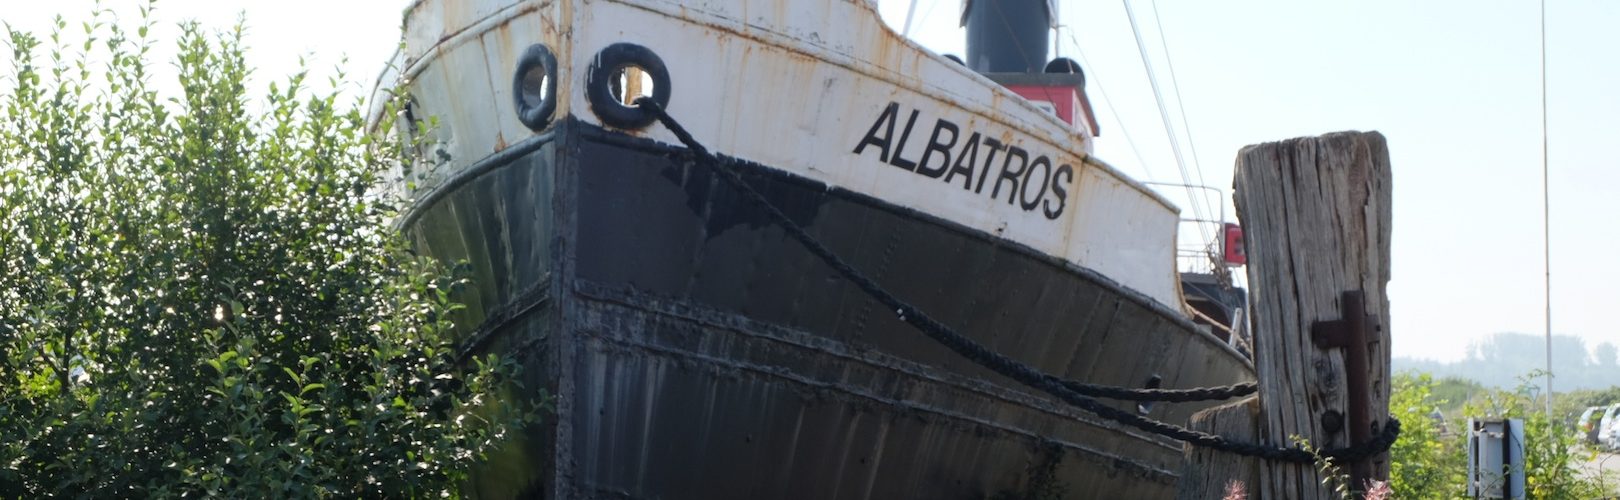 Museumsschiff Albatros Damp | © WEITES.LAND